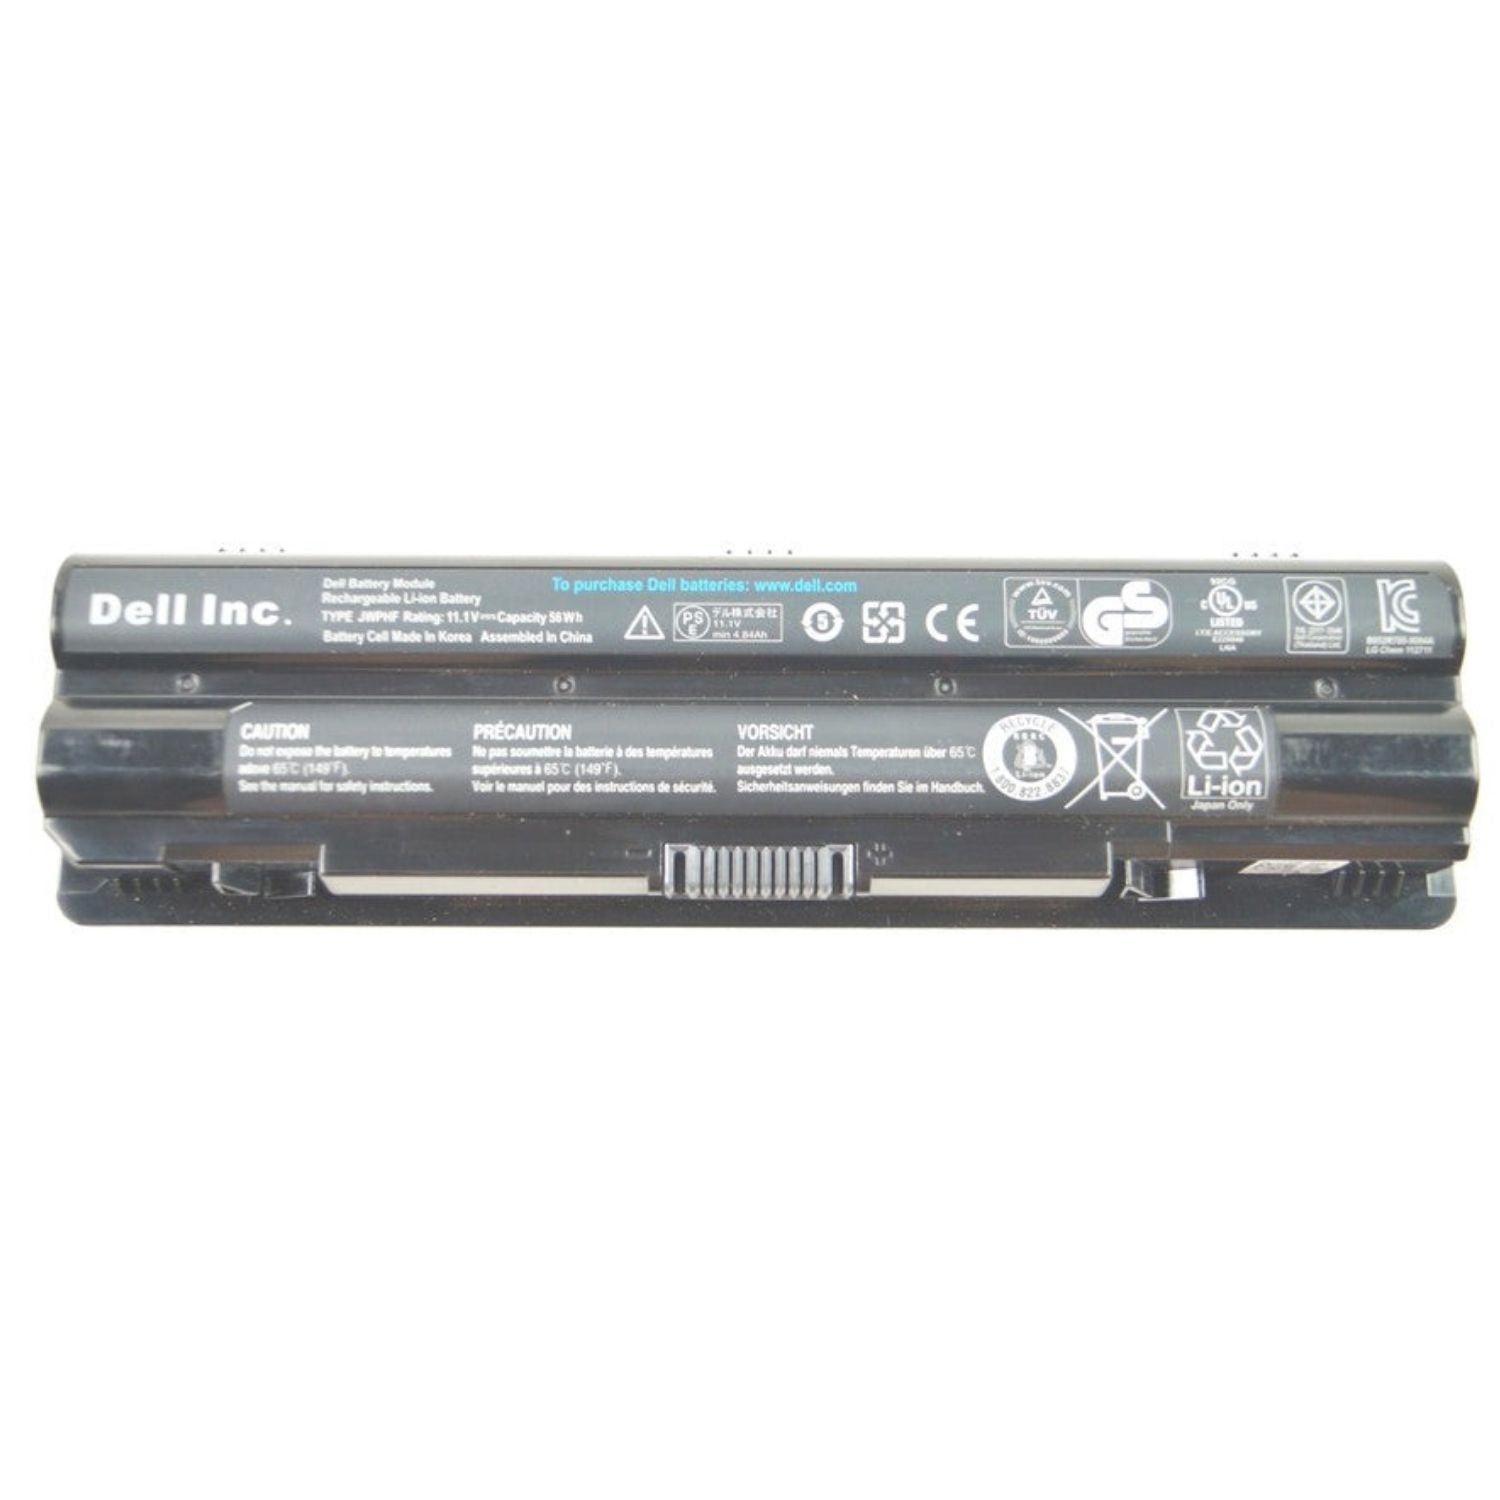 Dell JWPHF Battery For XPS 14 15 17 L502x L702x L501x L701x L702x L401X JWPHF AHA63226276 P09E 312-1123 312-1127 453-10186 J70W7 JWPHF WHXY3 R4CN5 0R4CN5 P12G 8PGNG P11F P11F001 P11F003 R795X Series Laptop's.